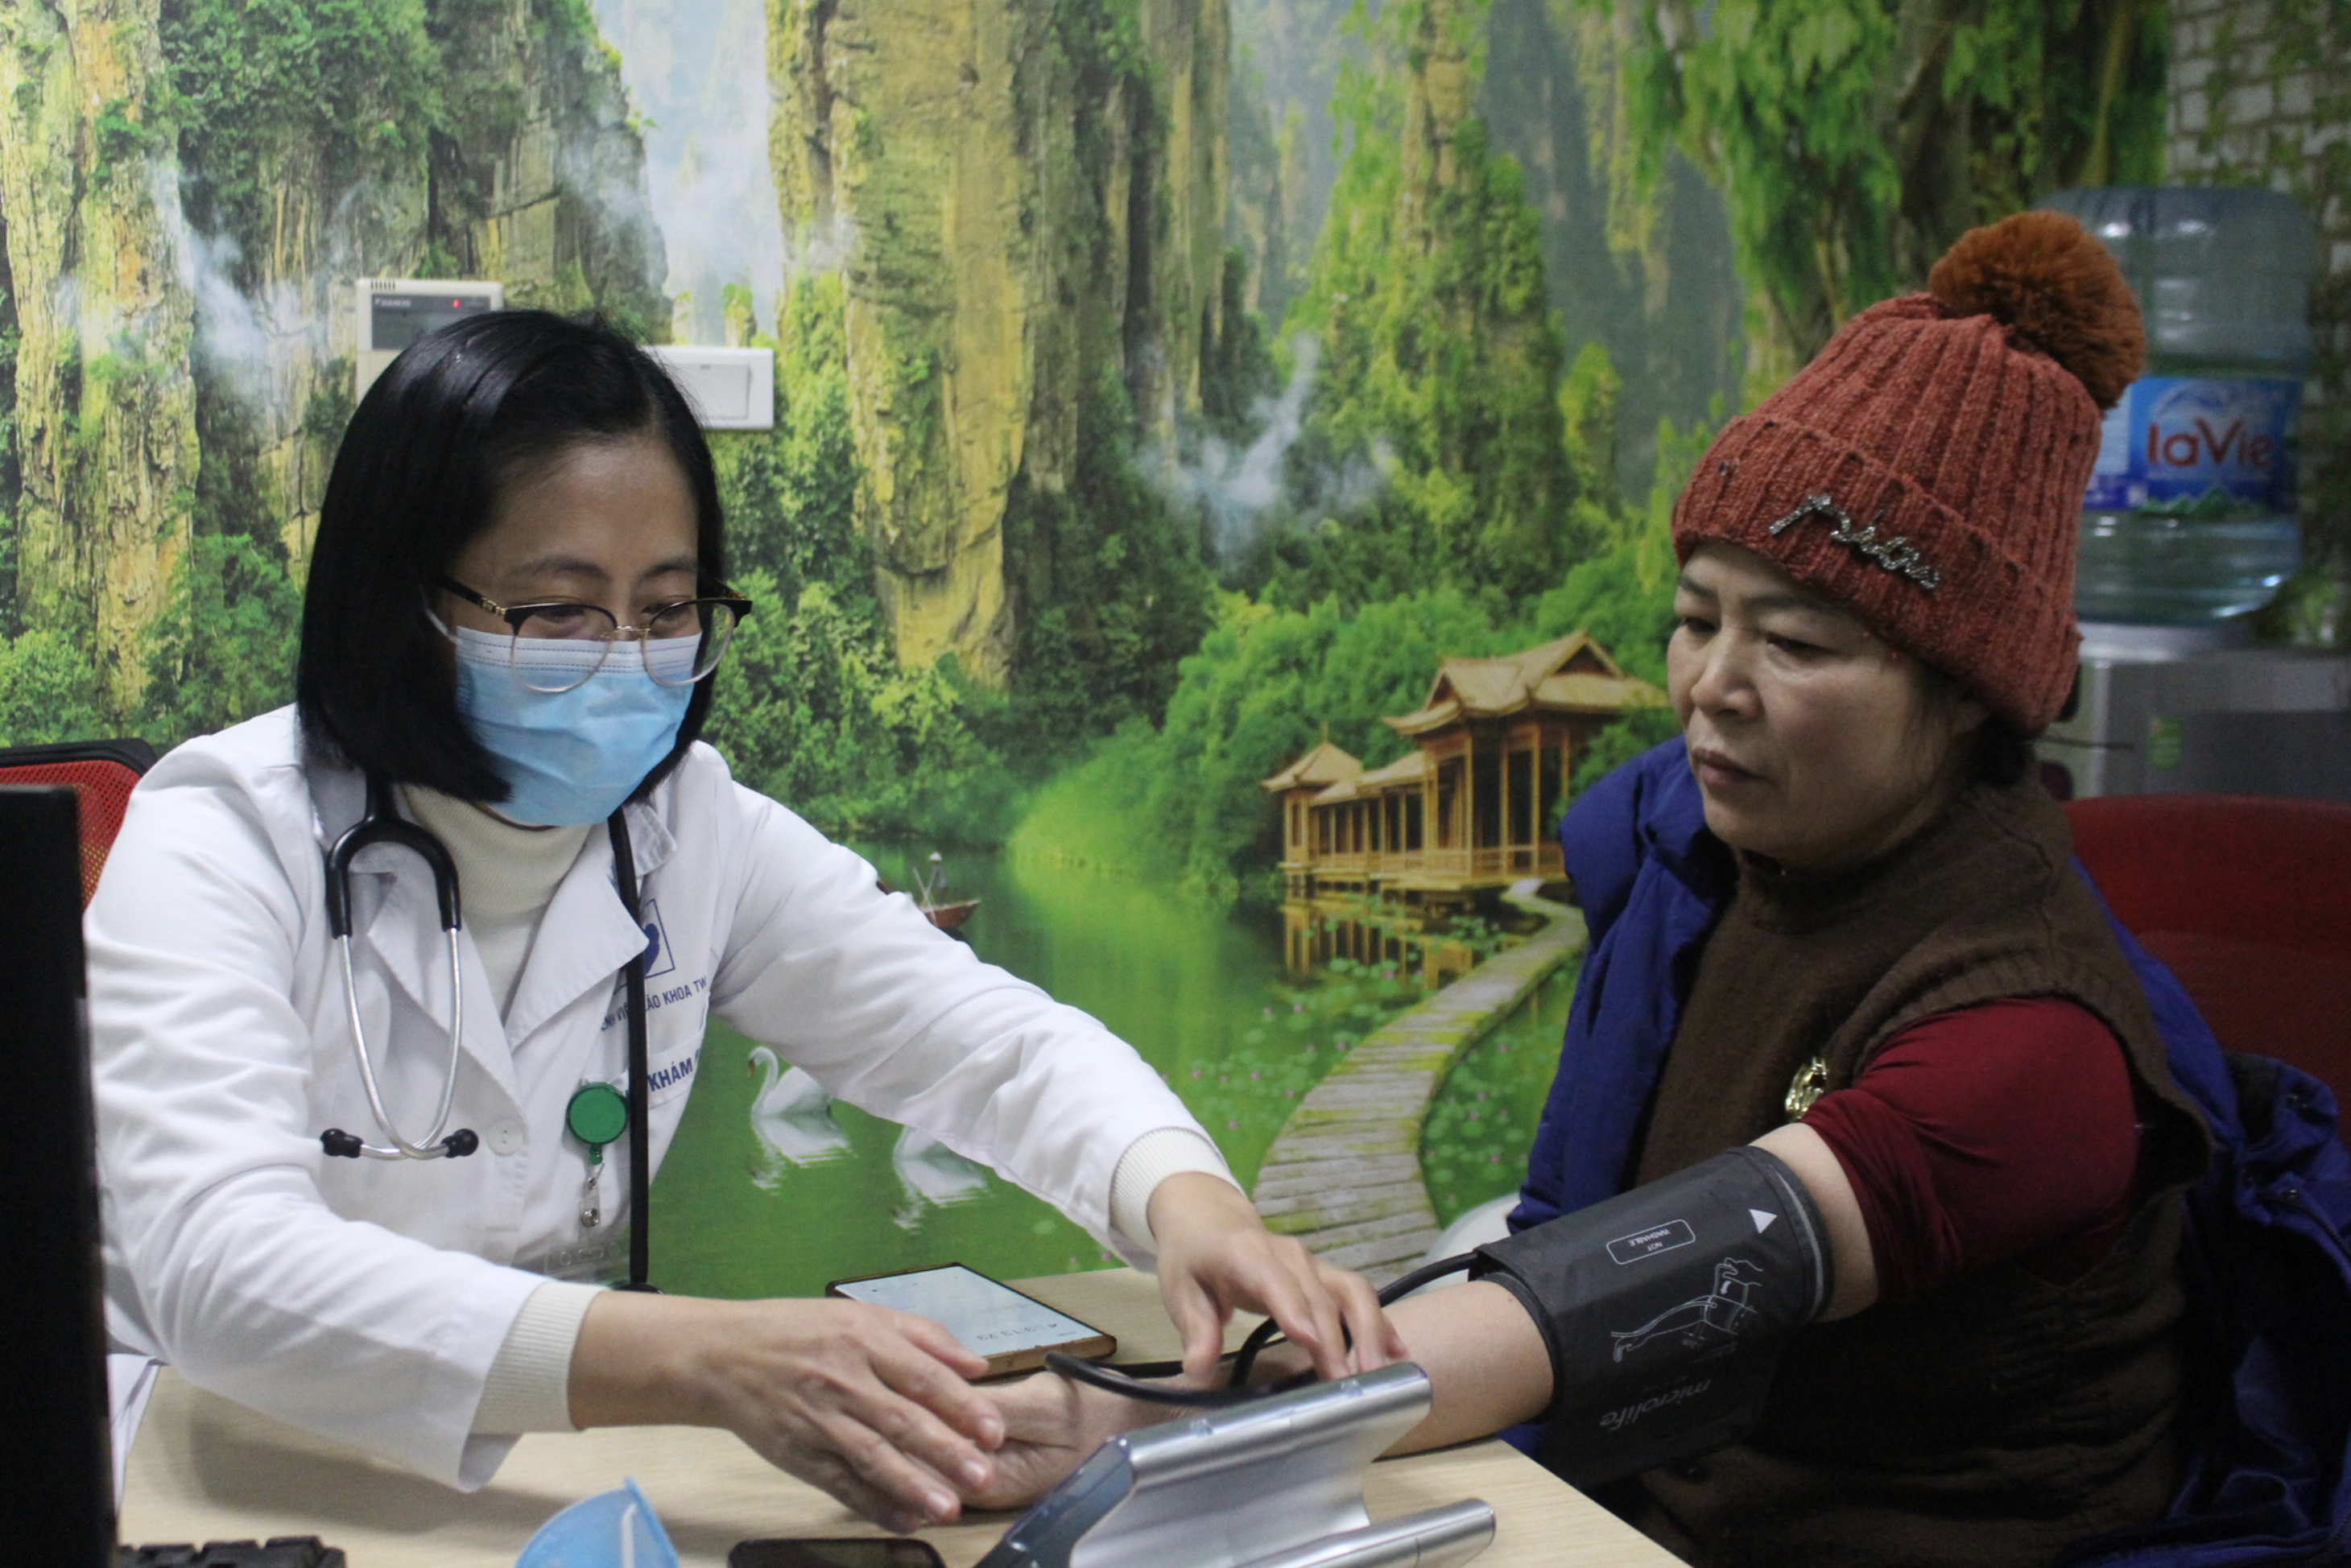 Dr Ha Thi Van at the National Geriatric Hospital in Hanoi checks a senior citizen’s health. Photo: Duong Lieu / Tuoi Tre